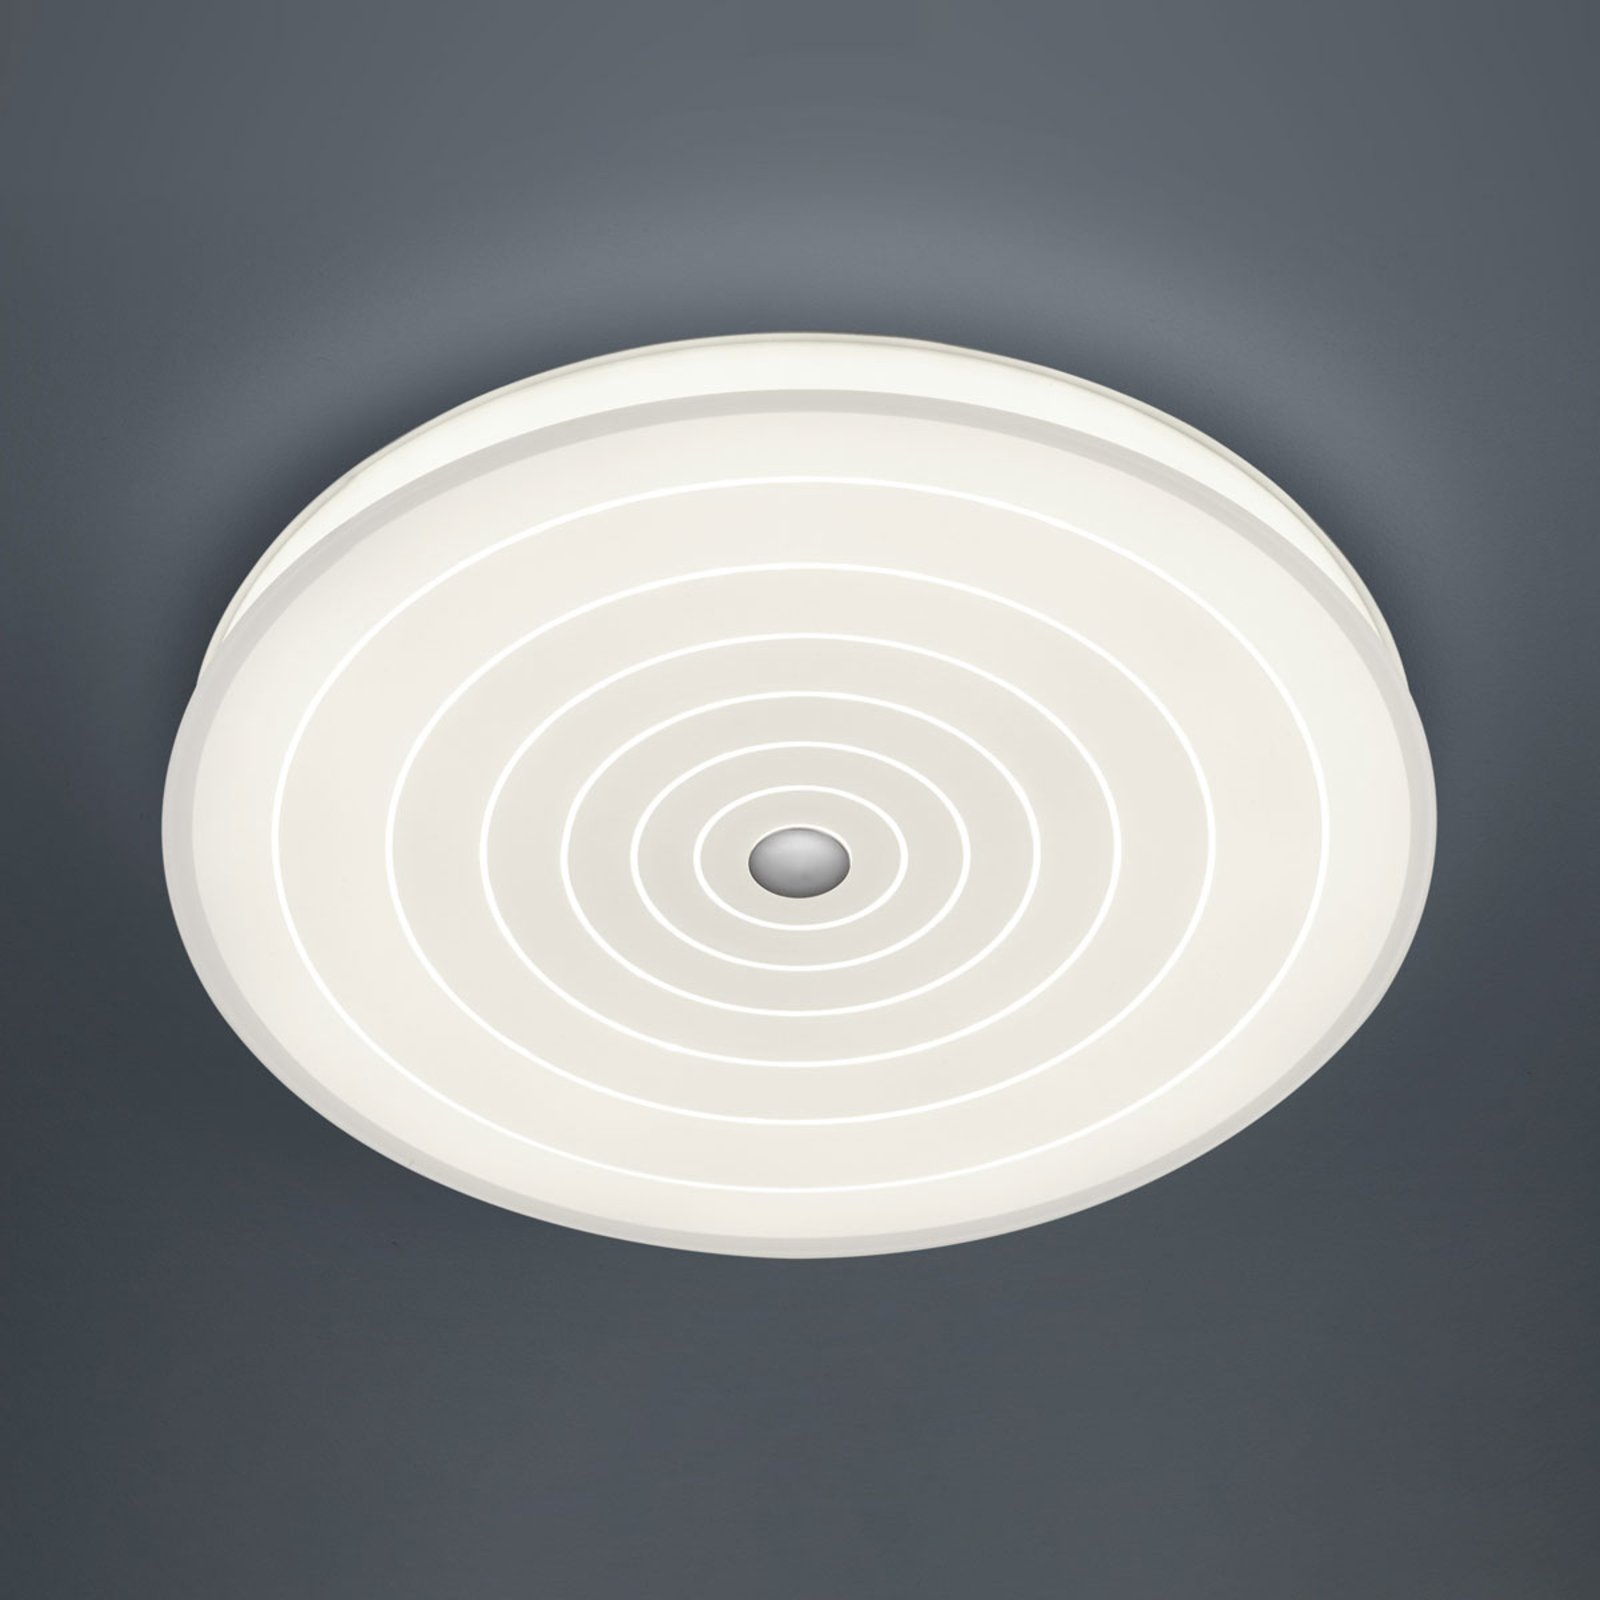 BANKAMP Mandala LED ceiling light, circles Ø 42 cm